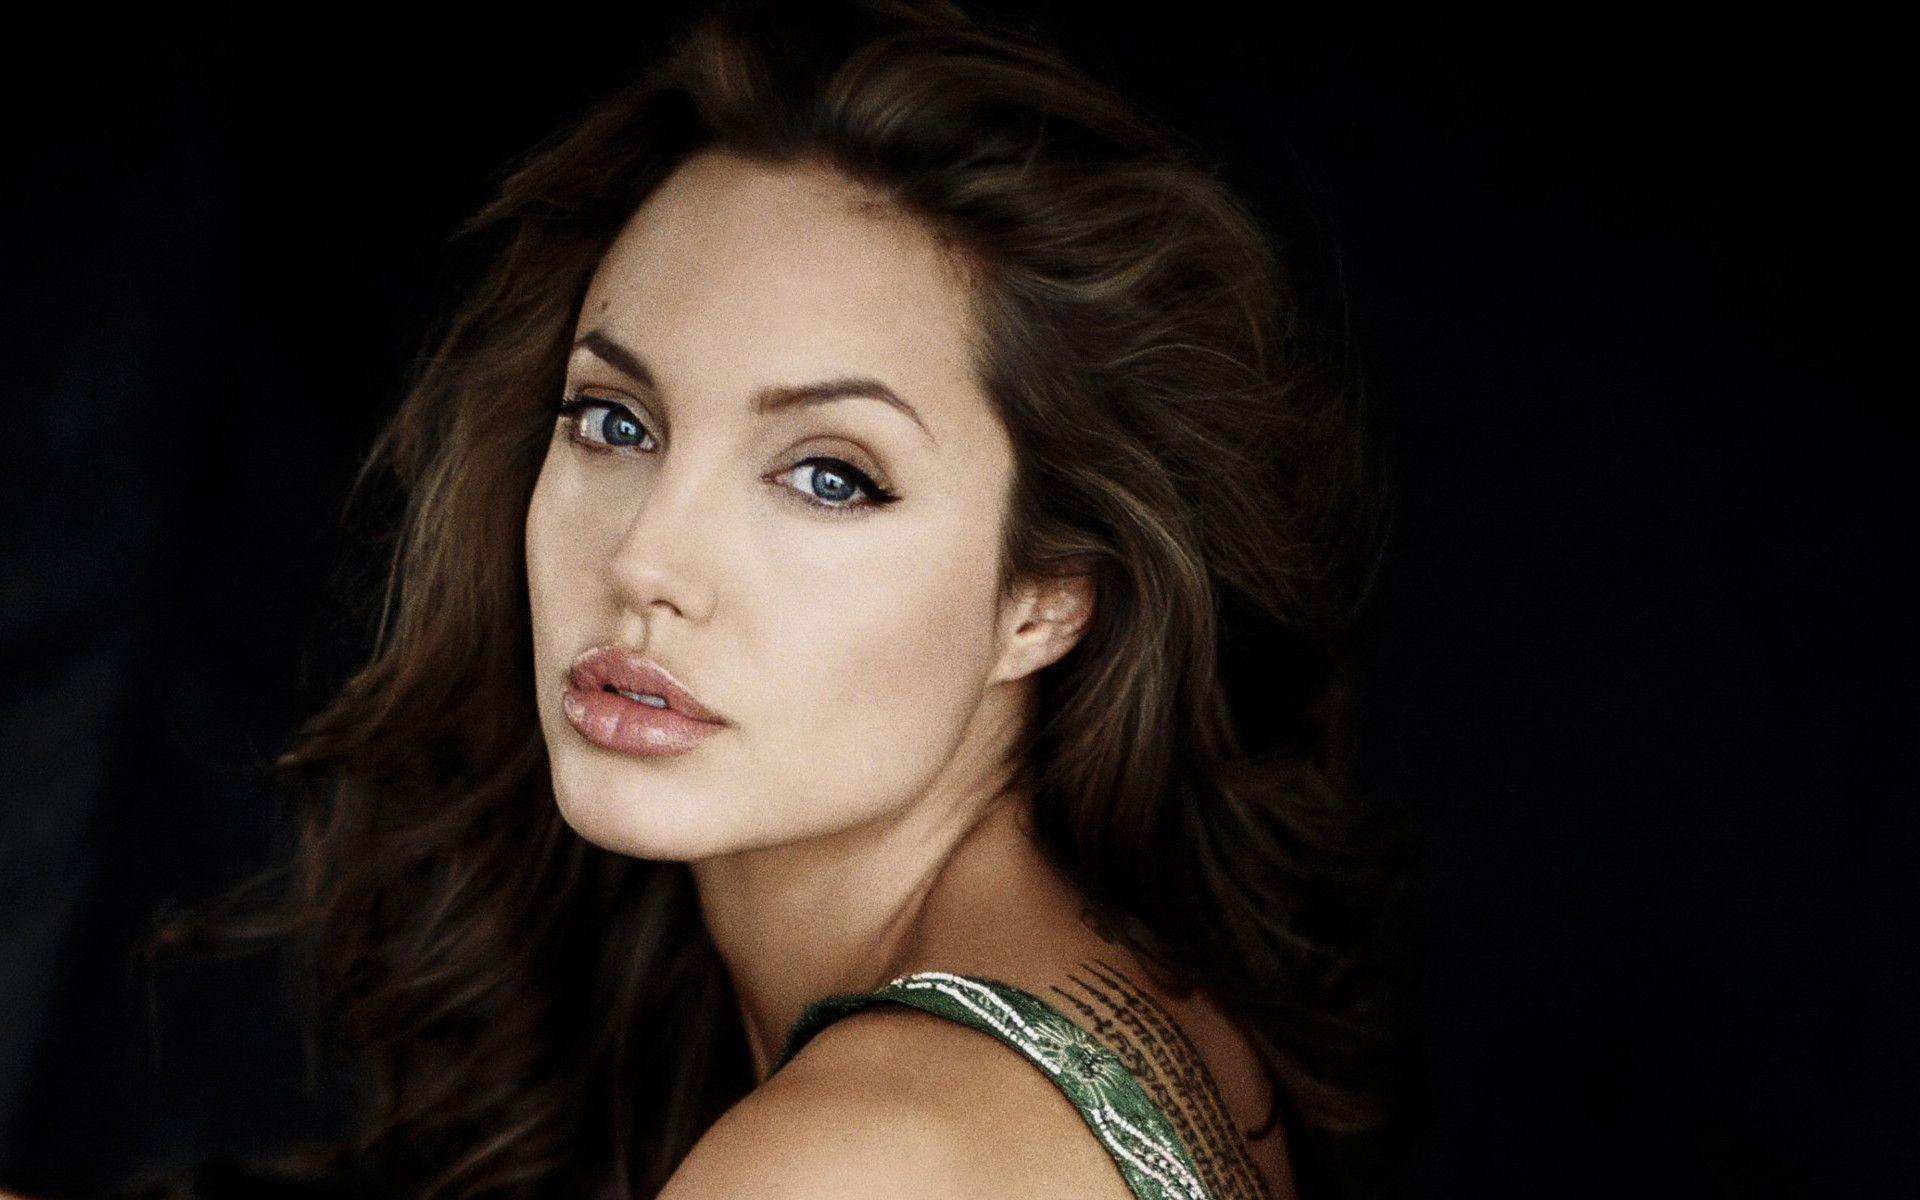 Pack.49: Angelina Jolie Wallpaper (1920x1200)